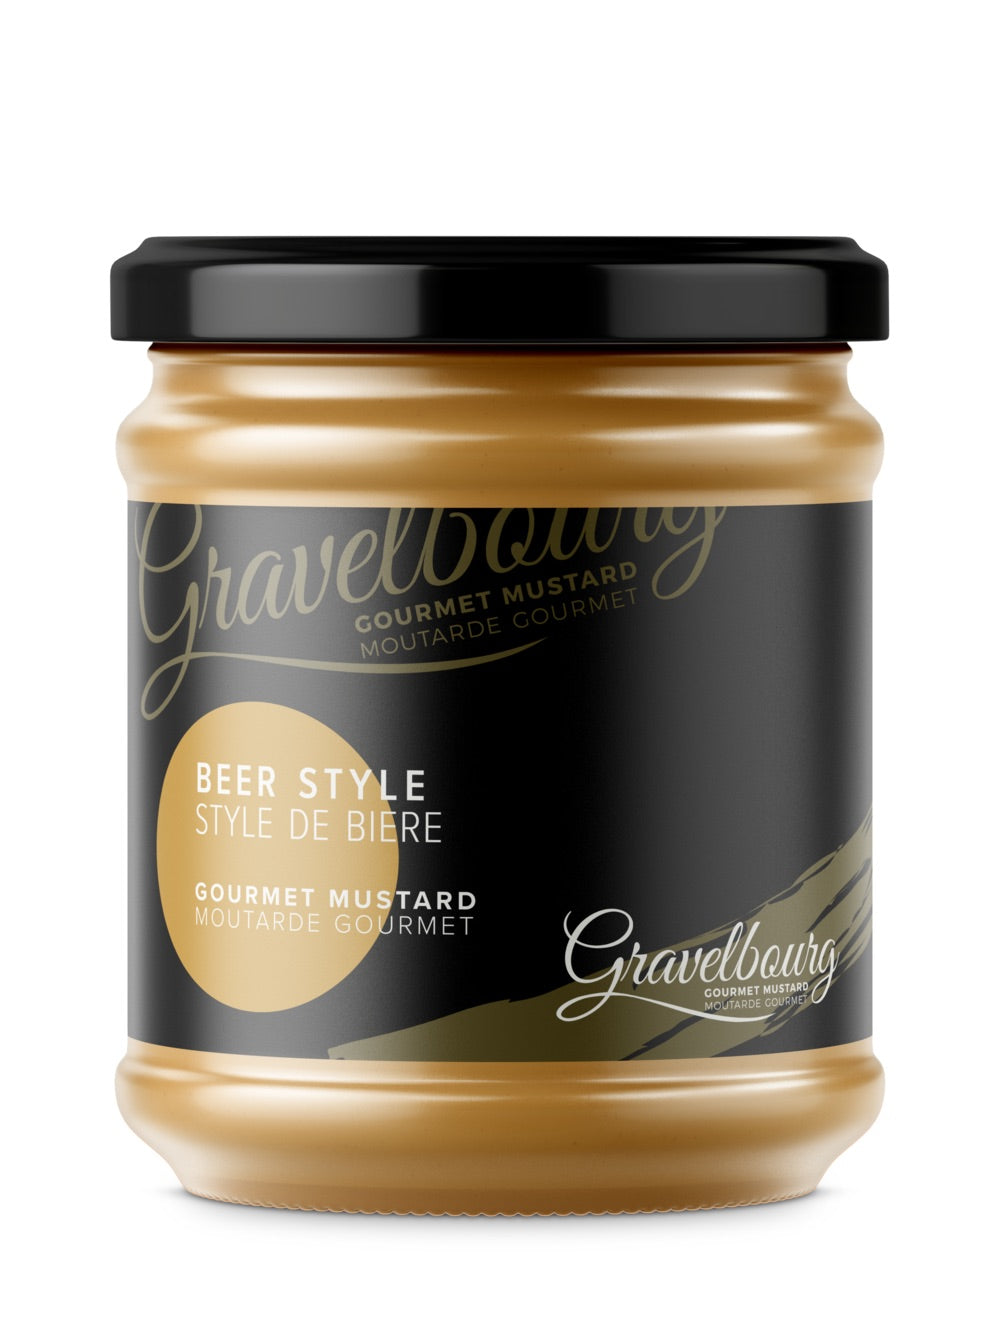 Gravelbourg Gourmet Mustard - Beer Style